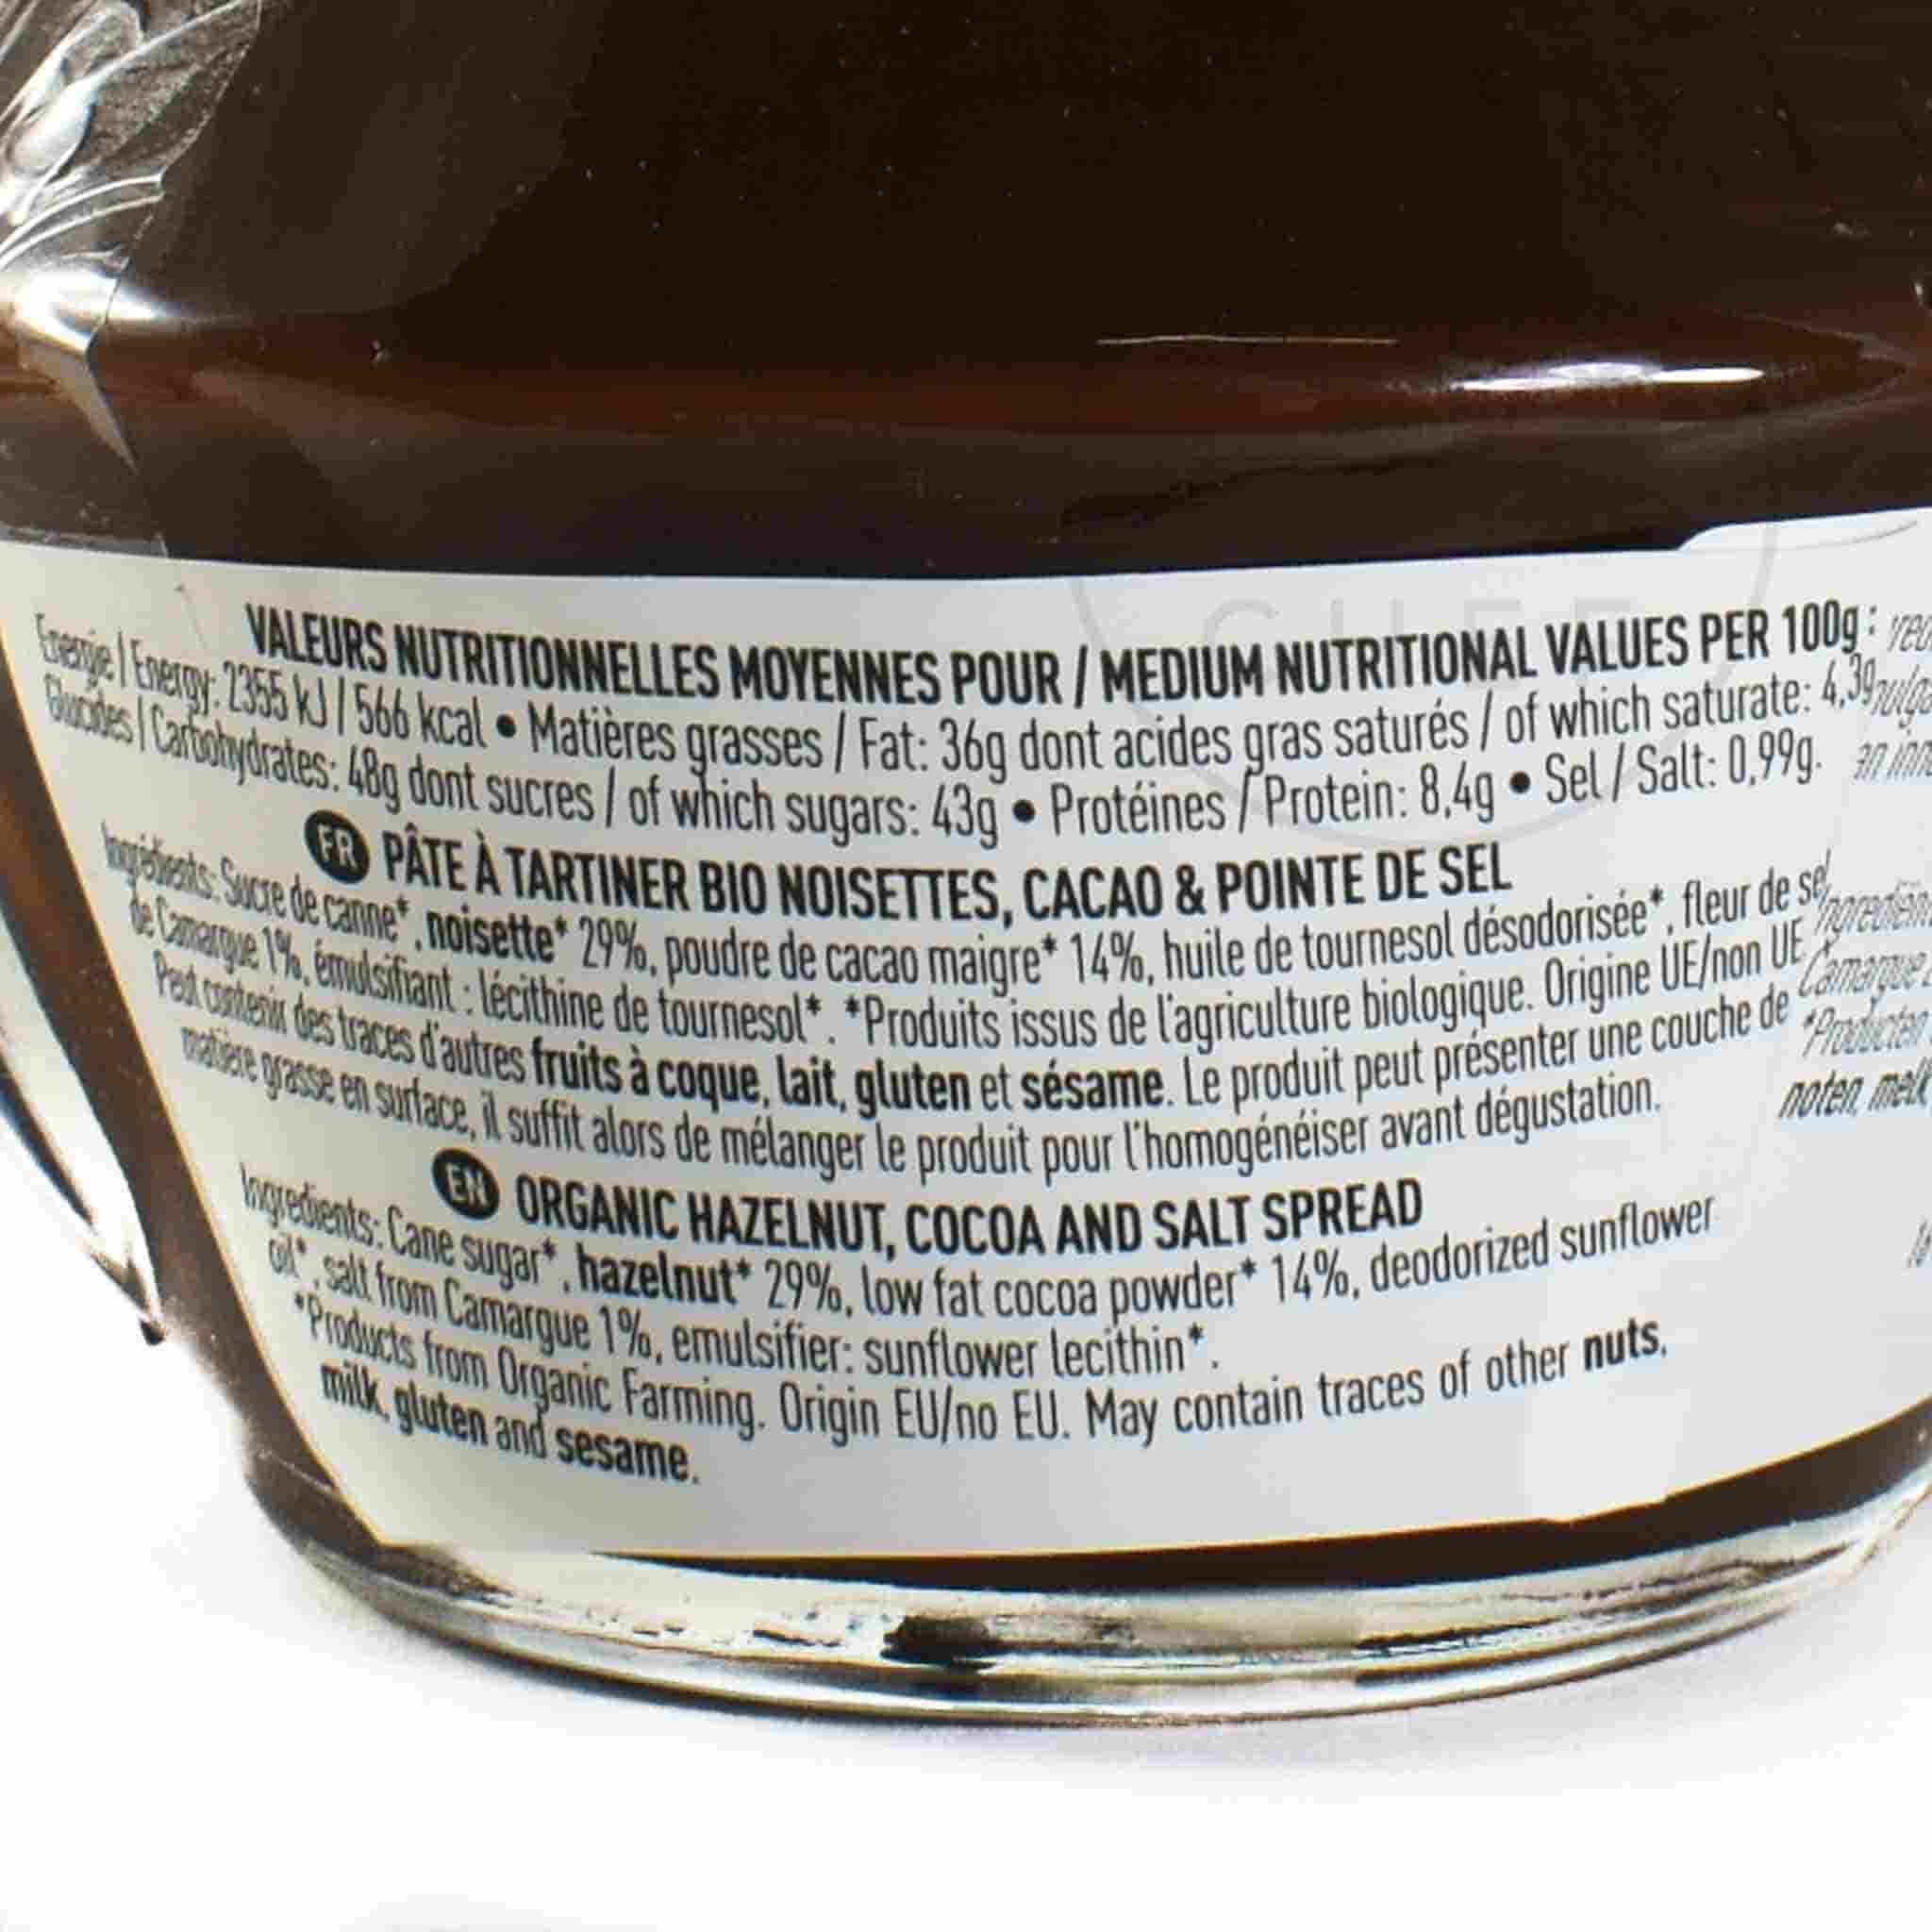 Maison Bremond Organic Hazelnut, Cocoa And Salt Spread 220g Ingredients